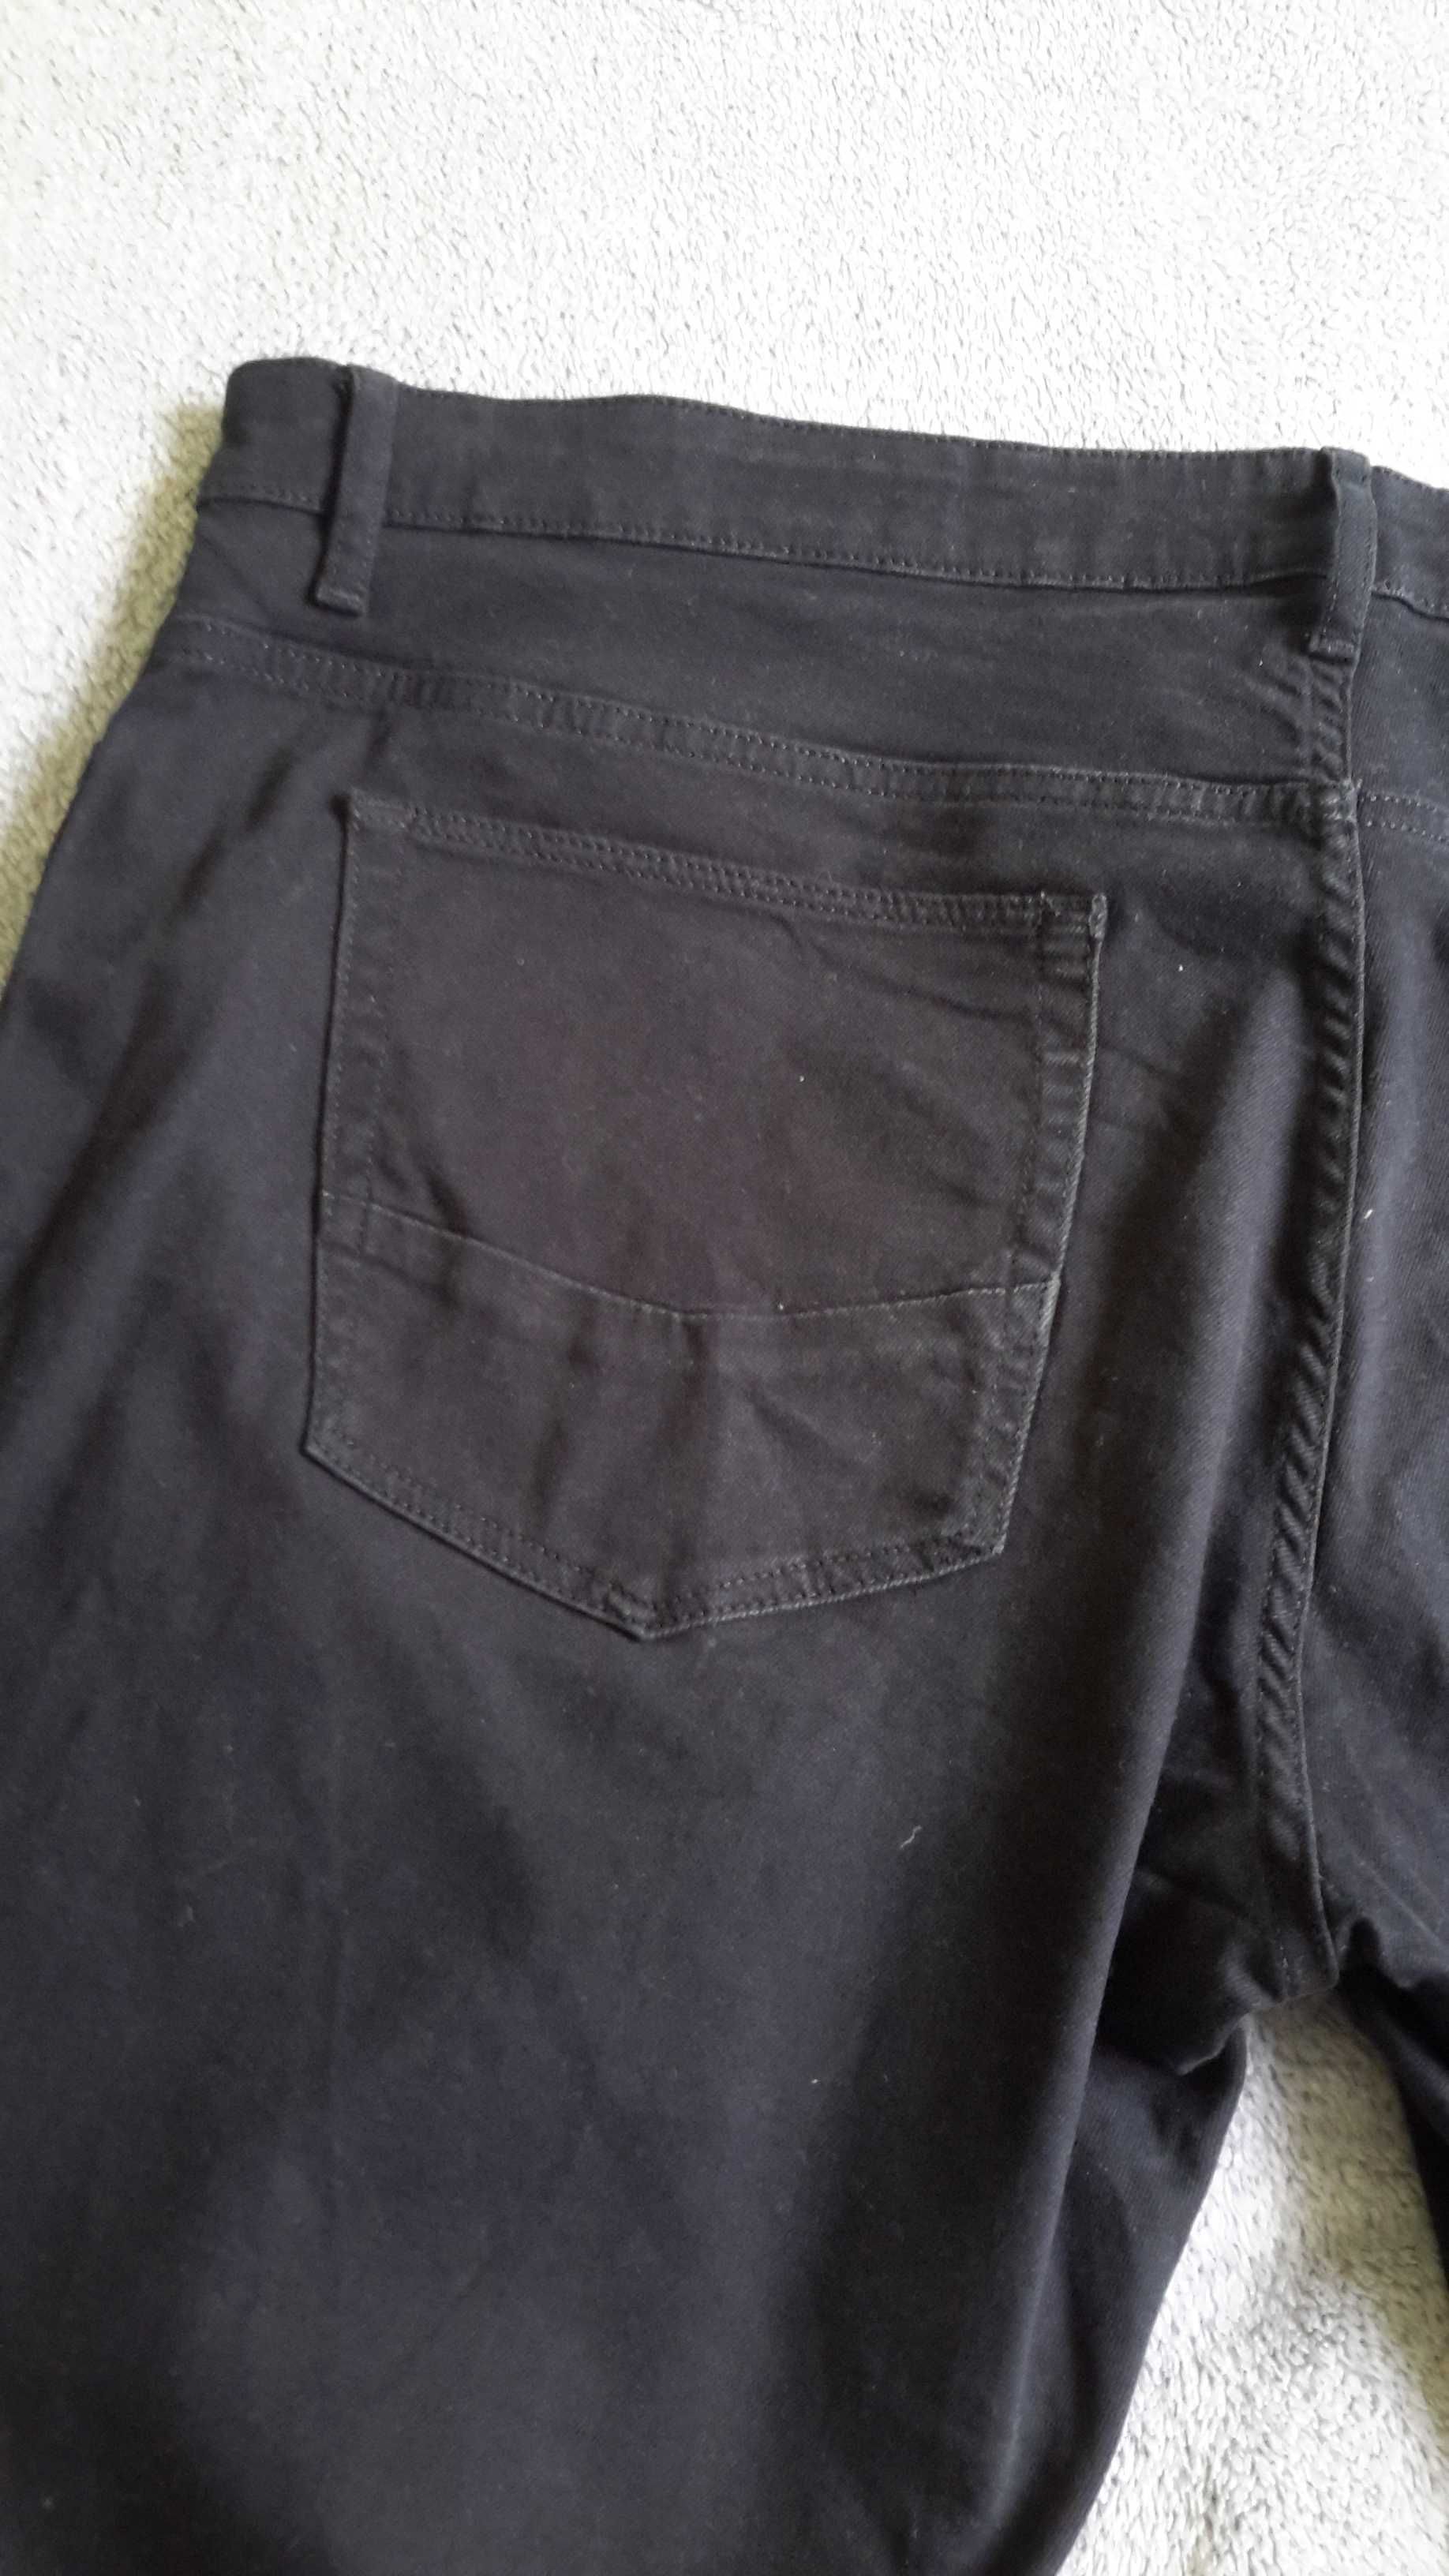 Spodnie męskie jeansy CROSS JEANS r.40/30 dżinsy  czarne pas 108 cm